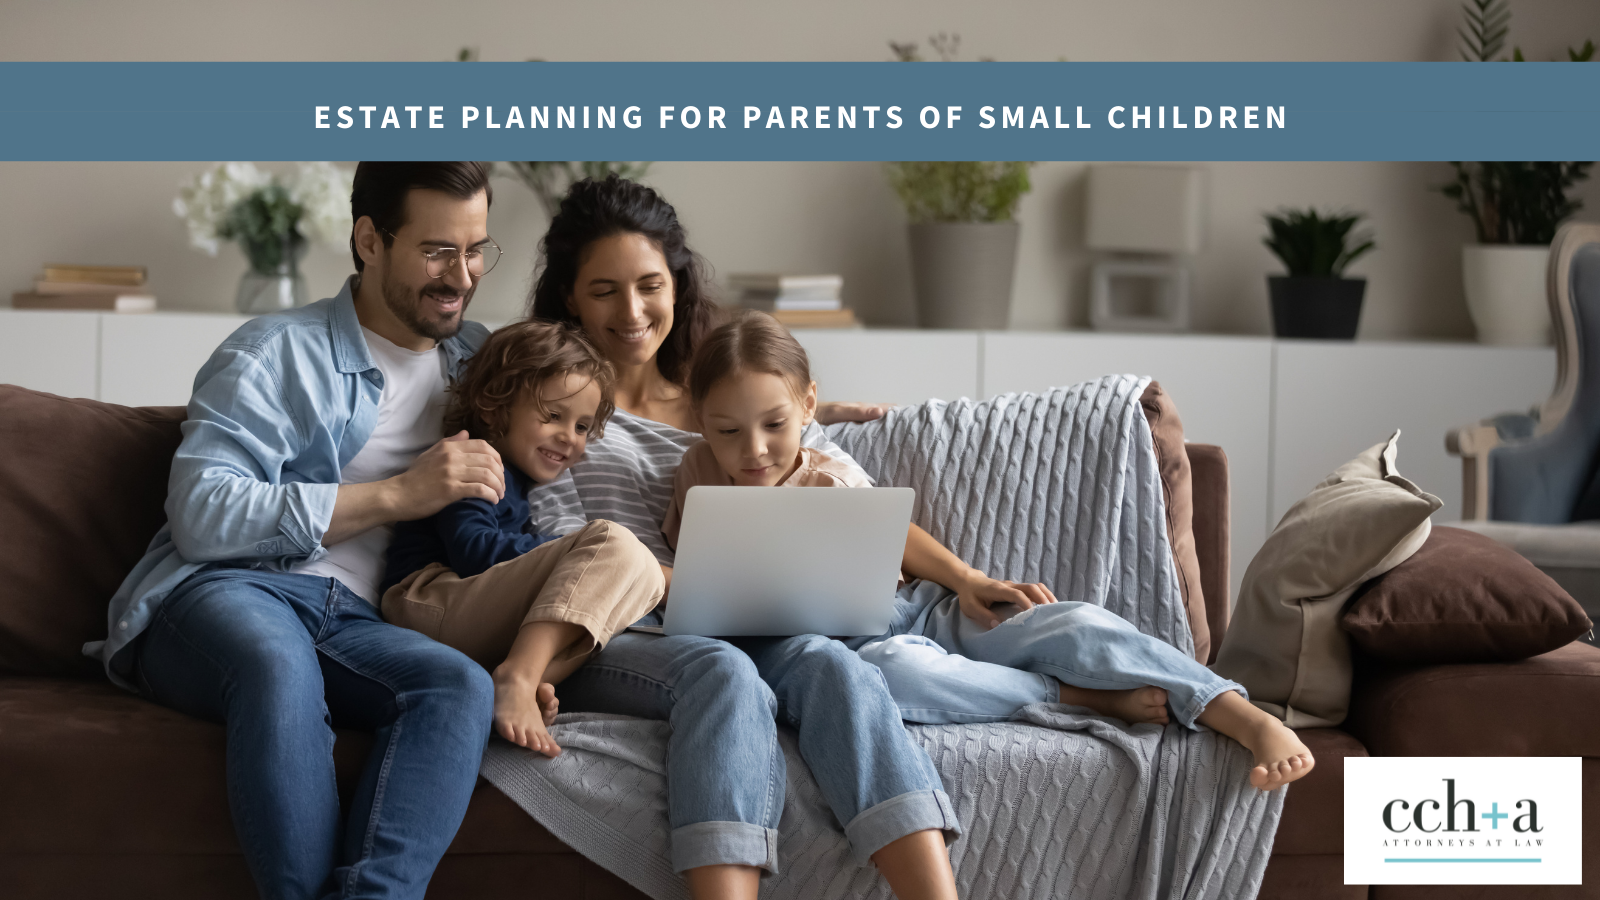 CCHA estate planning for parents of small children blog